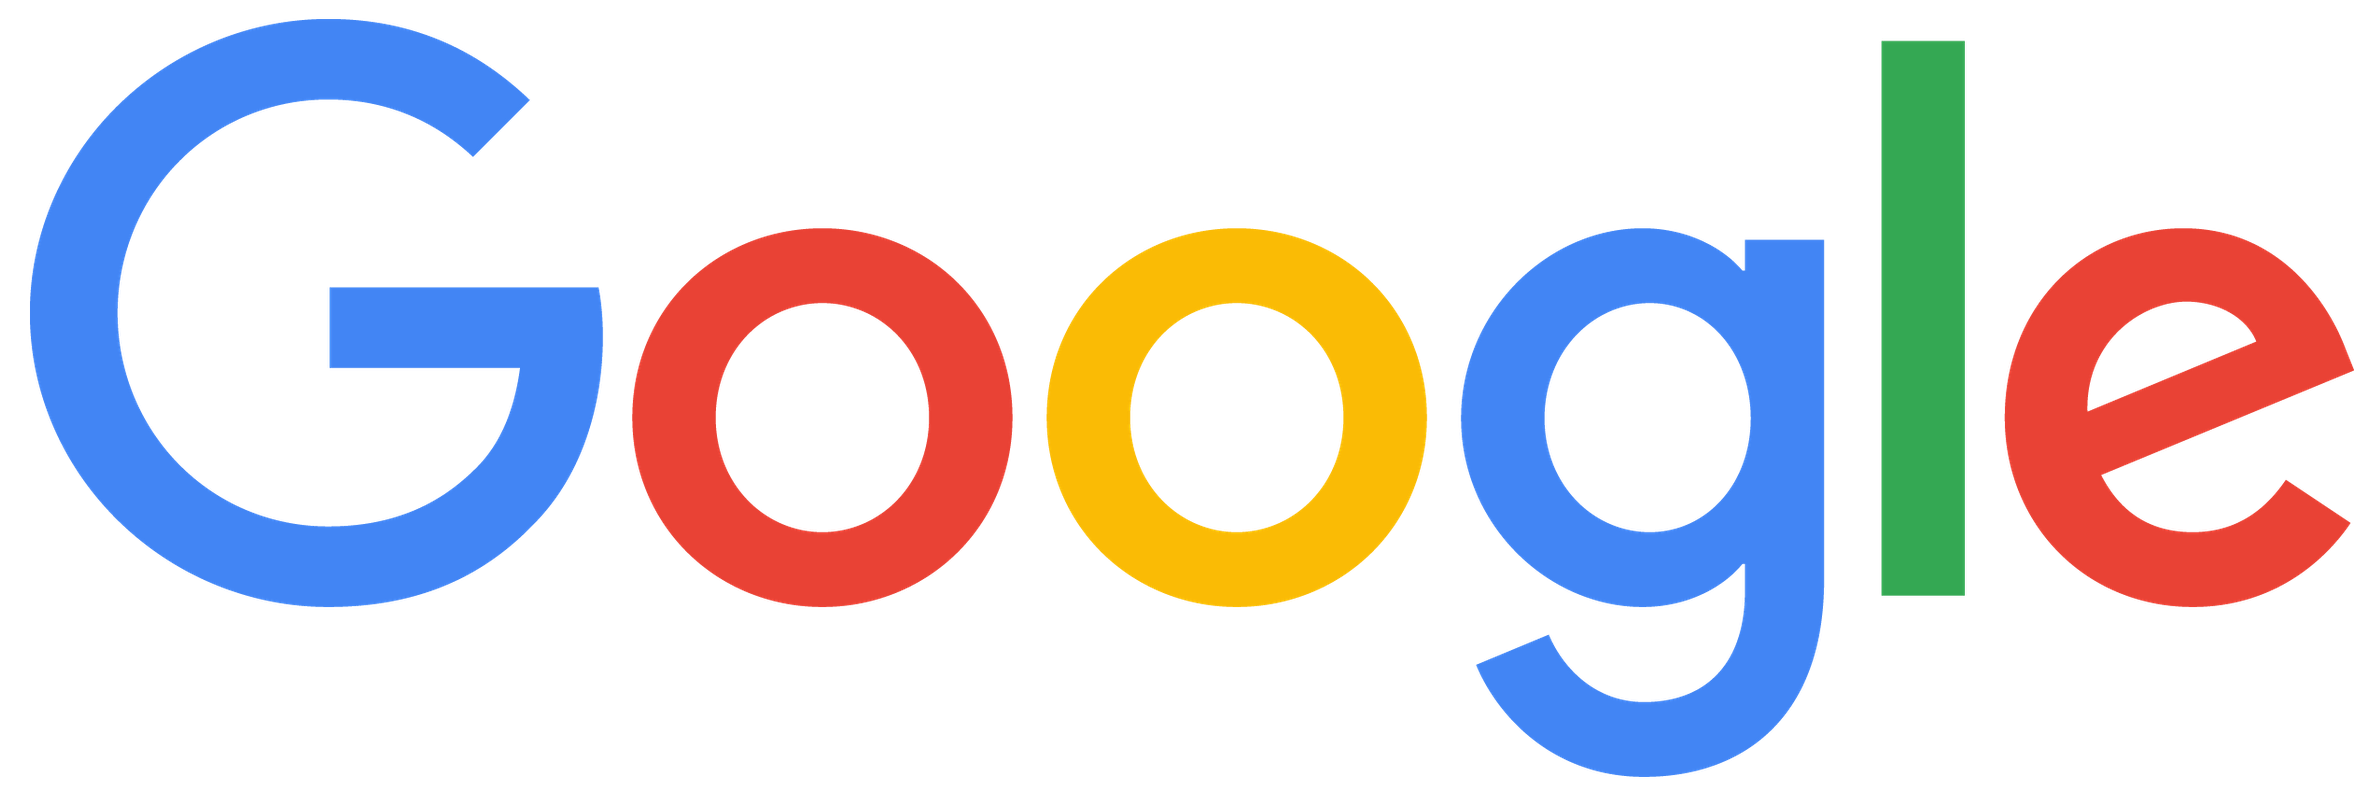 Google text logo